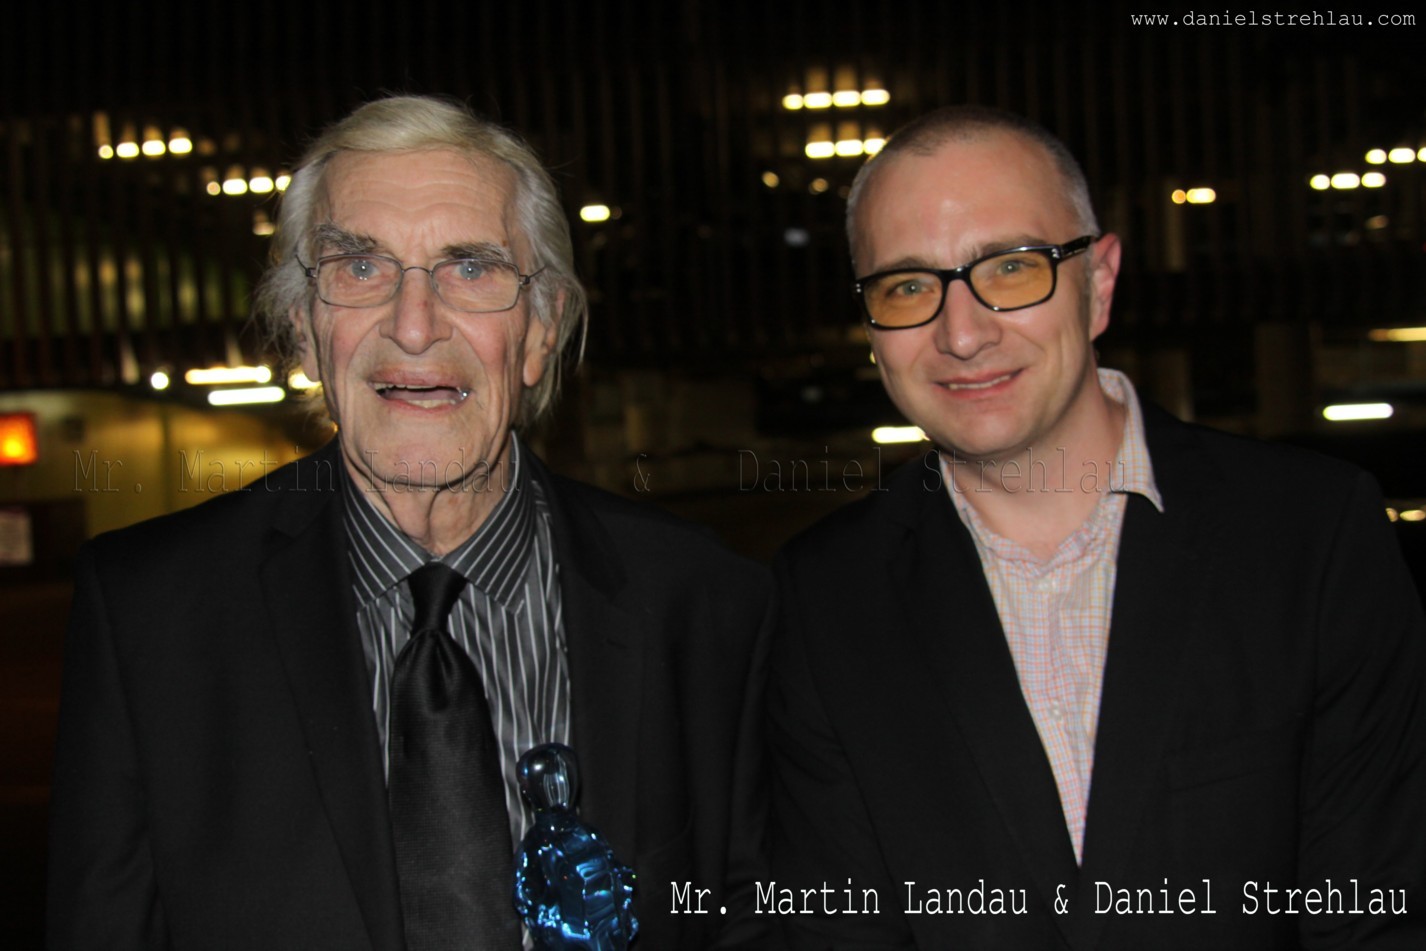 Martin Landau & Daniel Strehlau during MEIR`S FESTIVAL documentary production